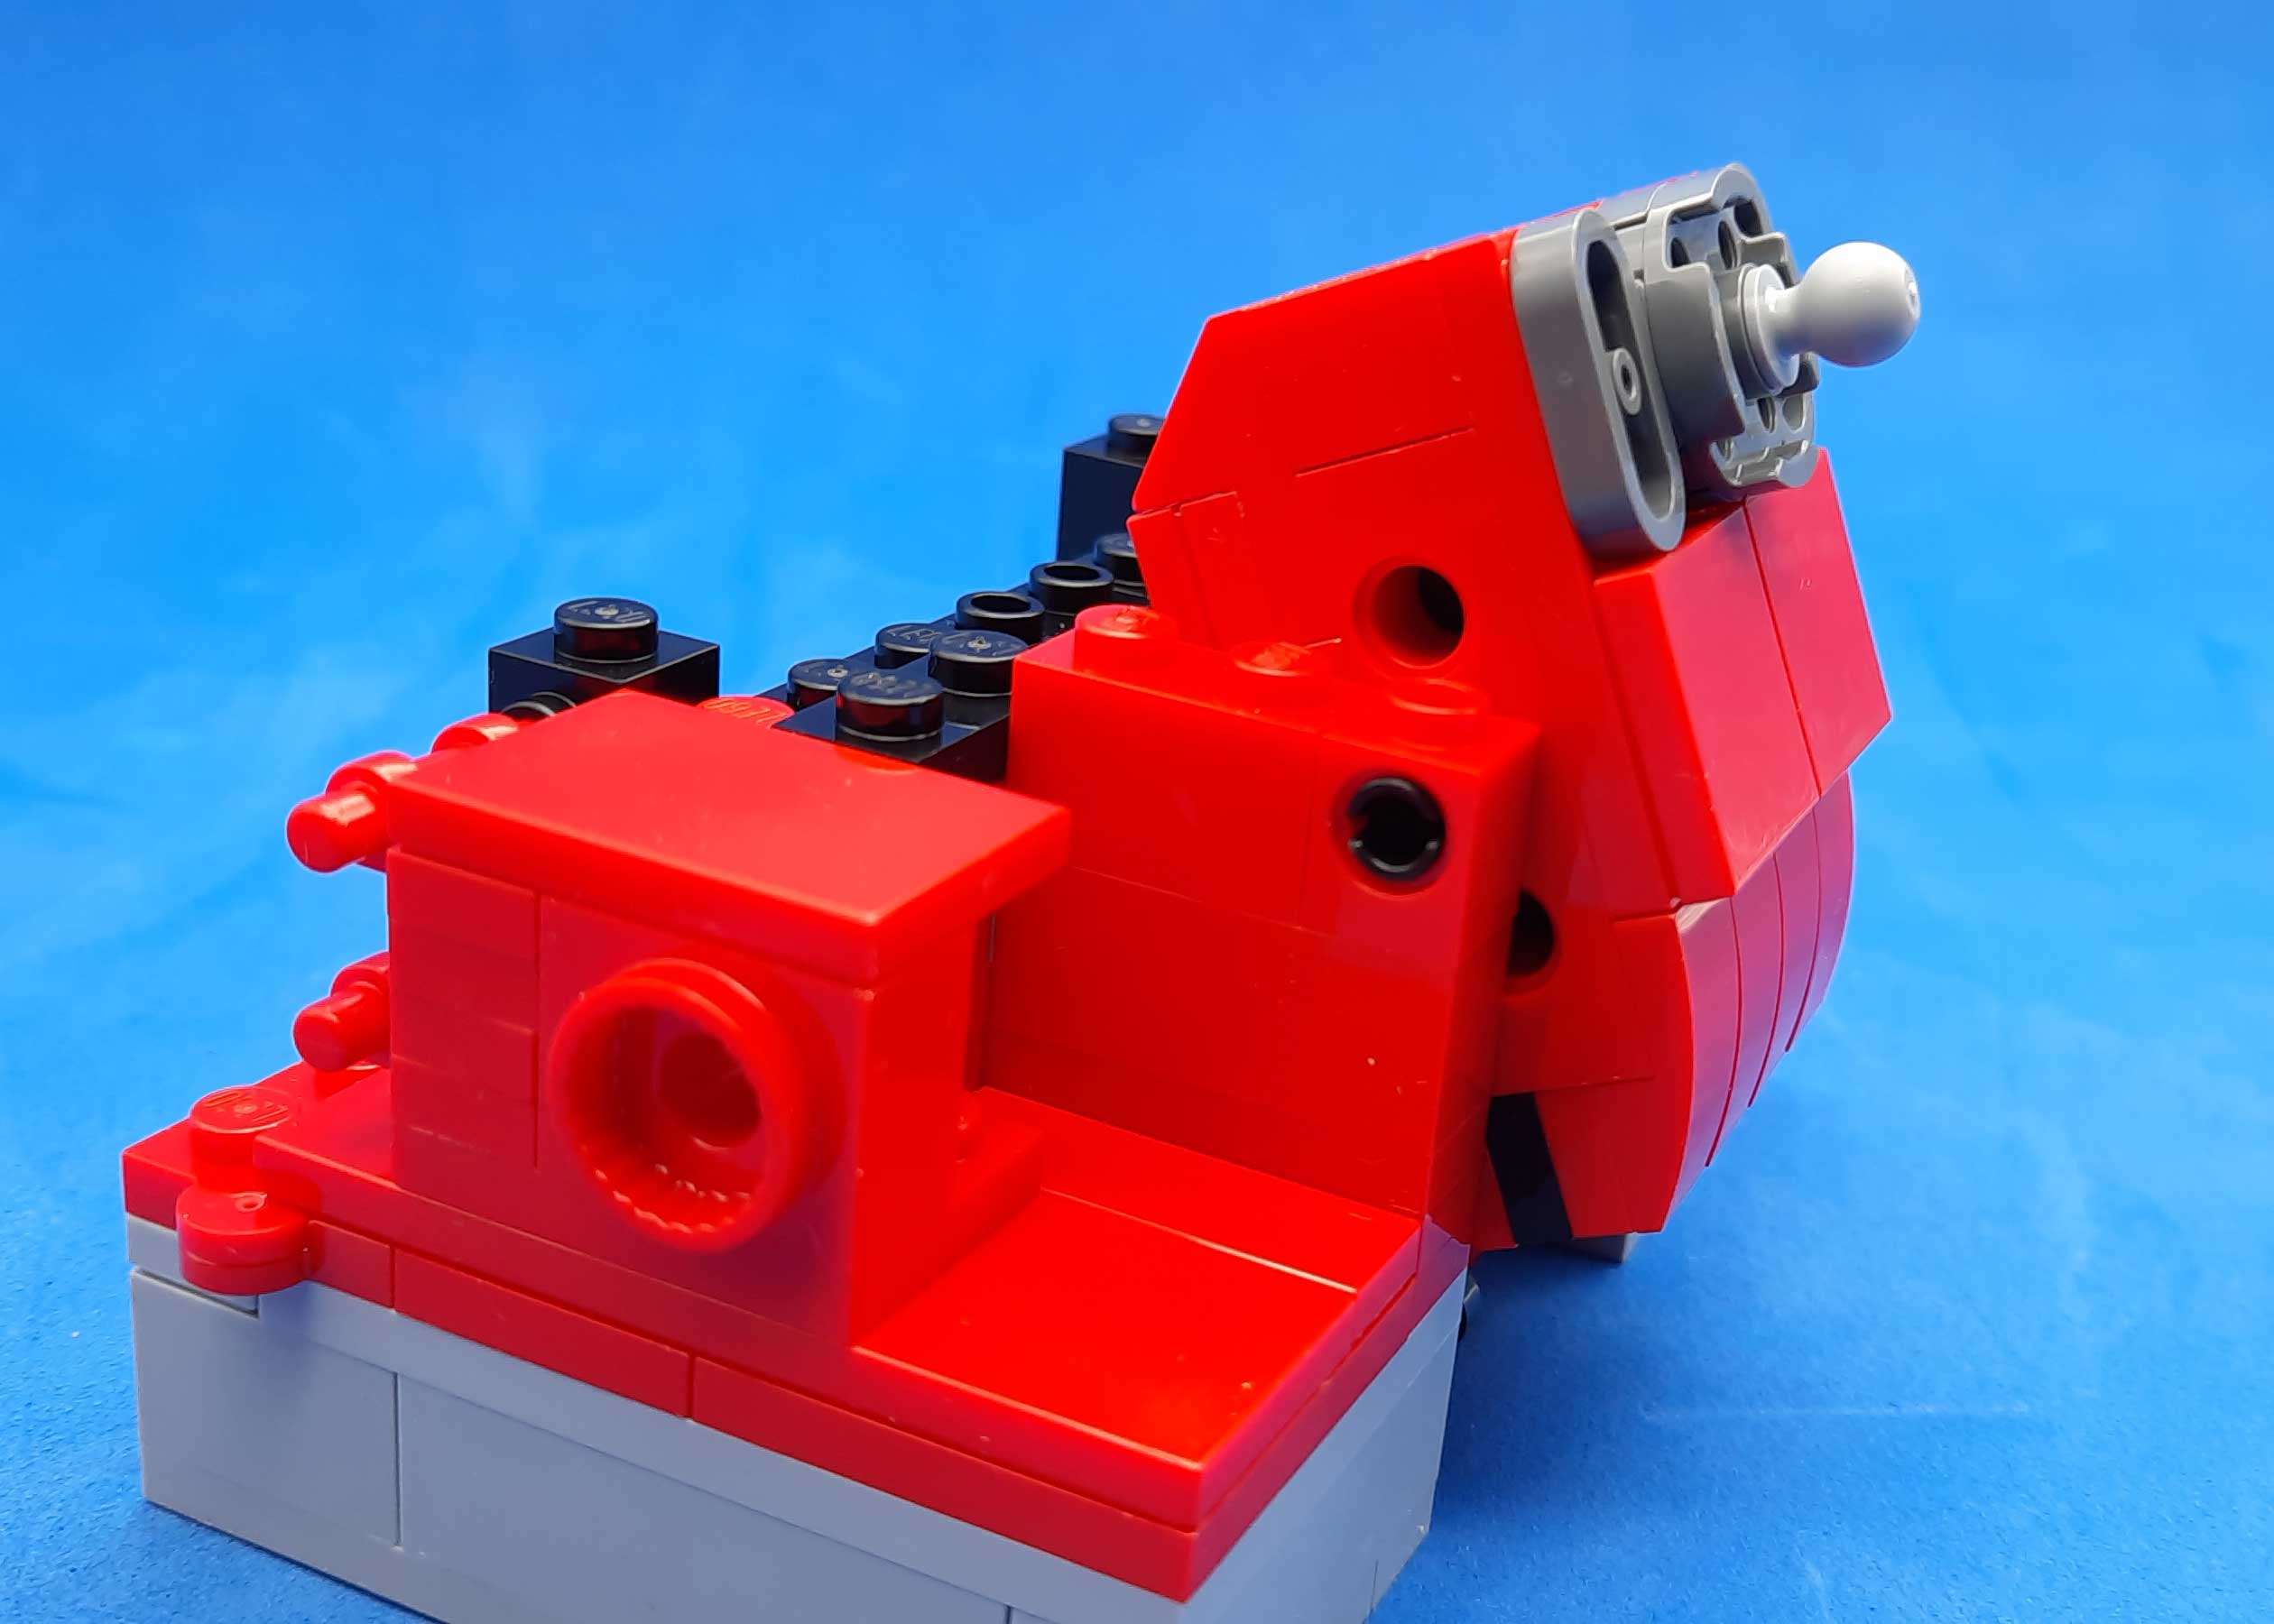 Bricks in Bits LEGO review revision set Optimus Prime 10302 Autobots Transformers Creator Expert set noticias novedad